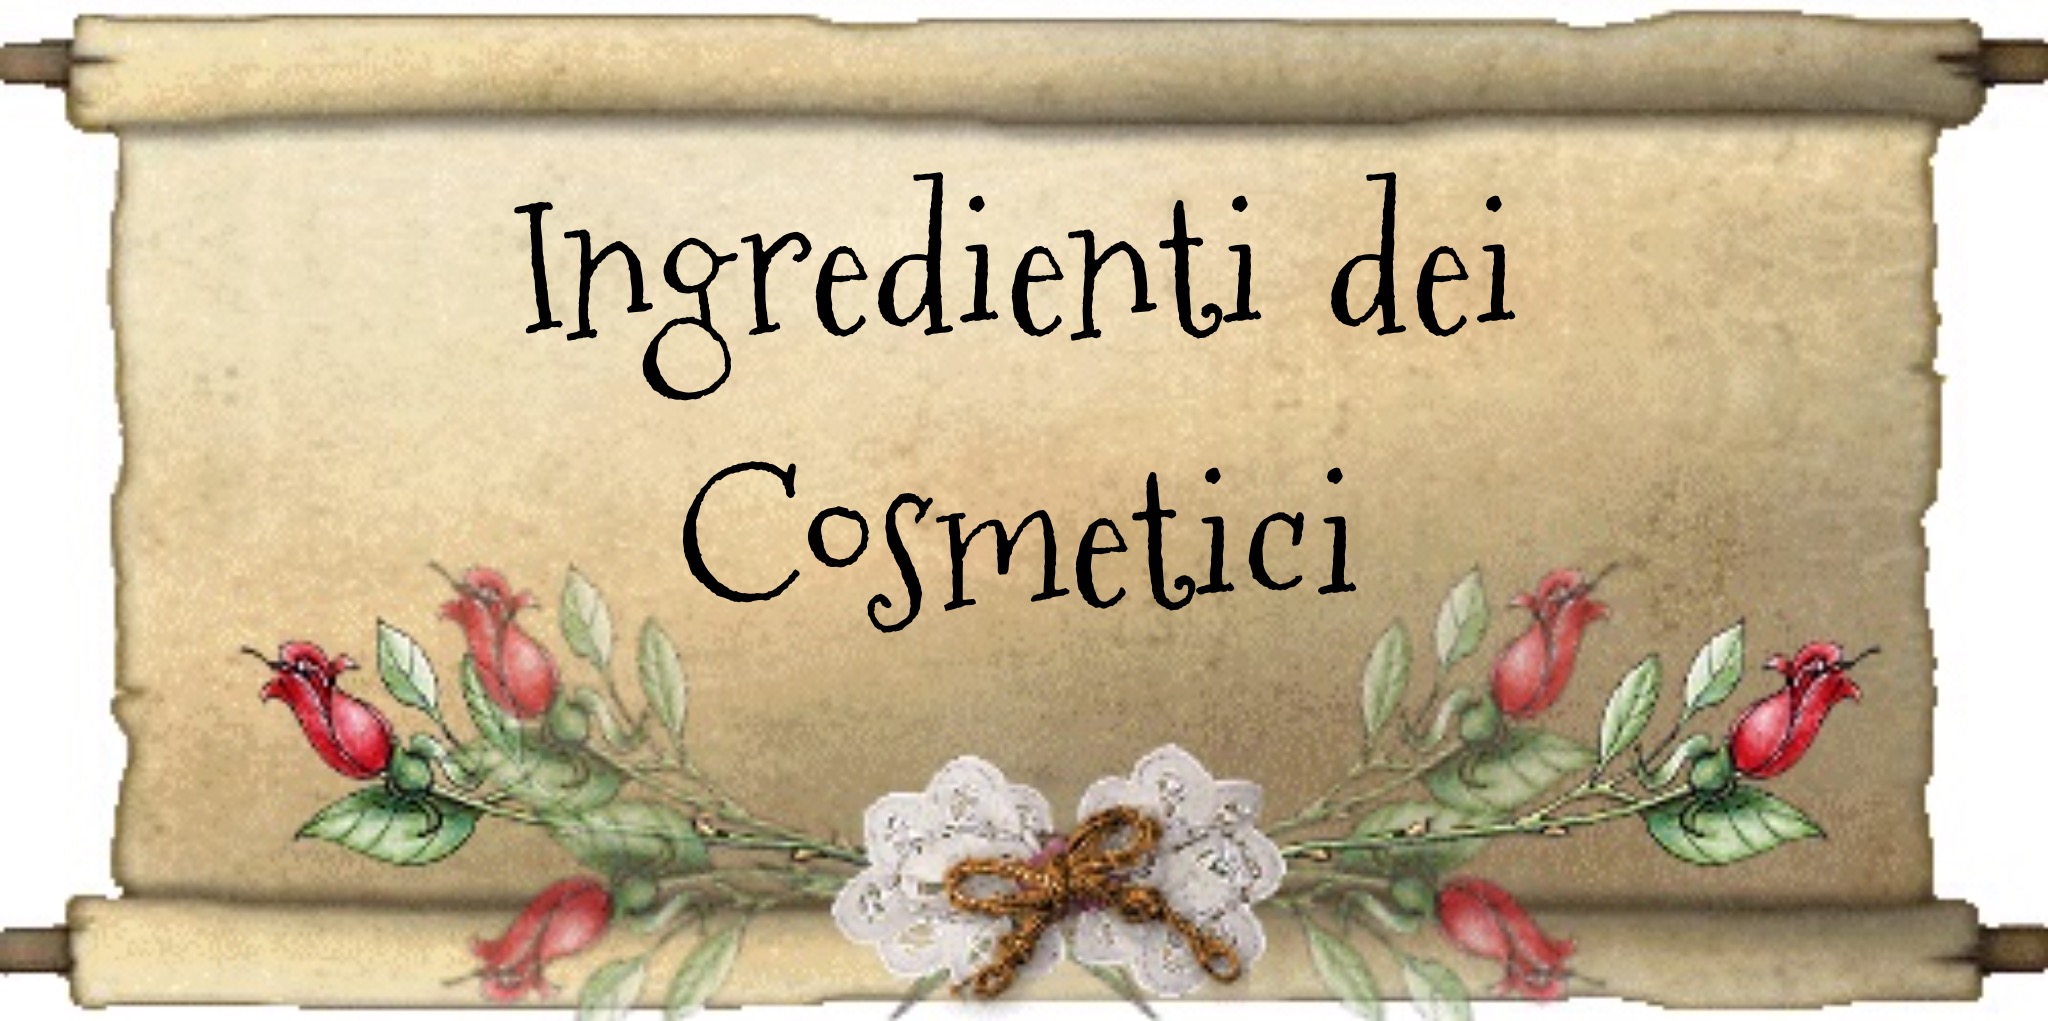 Ingredienti-dei-cosmetici-iloveremunni-dorothy